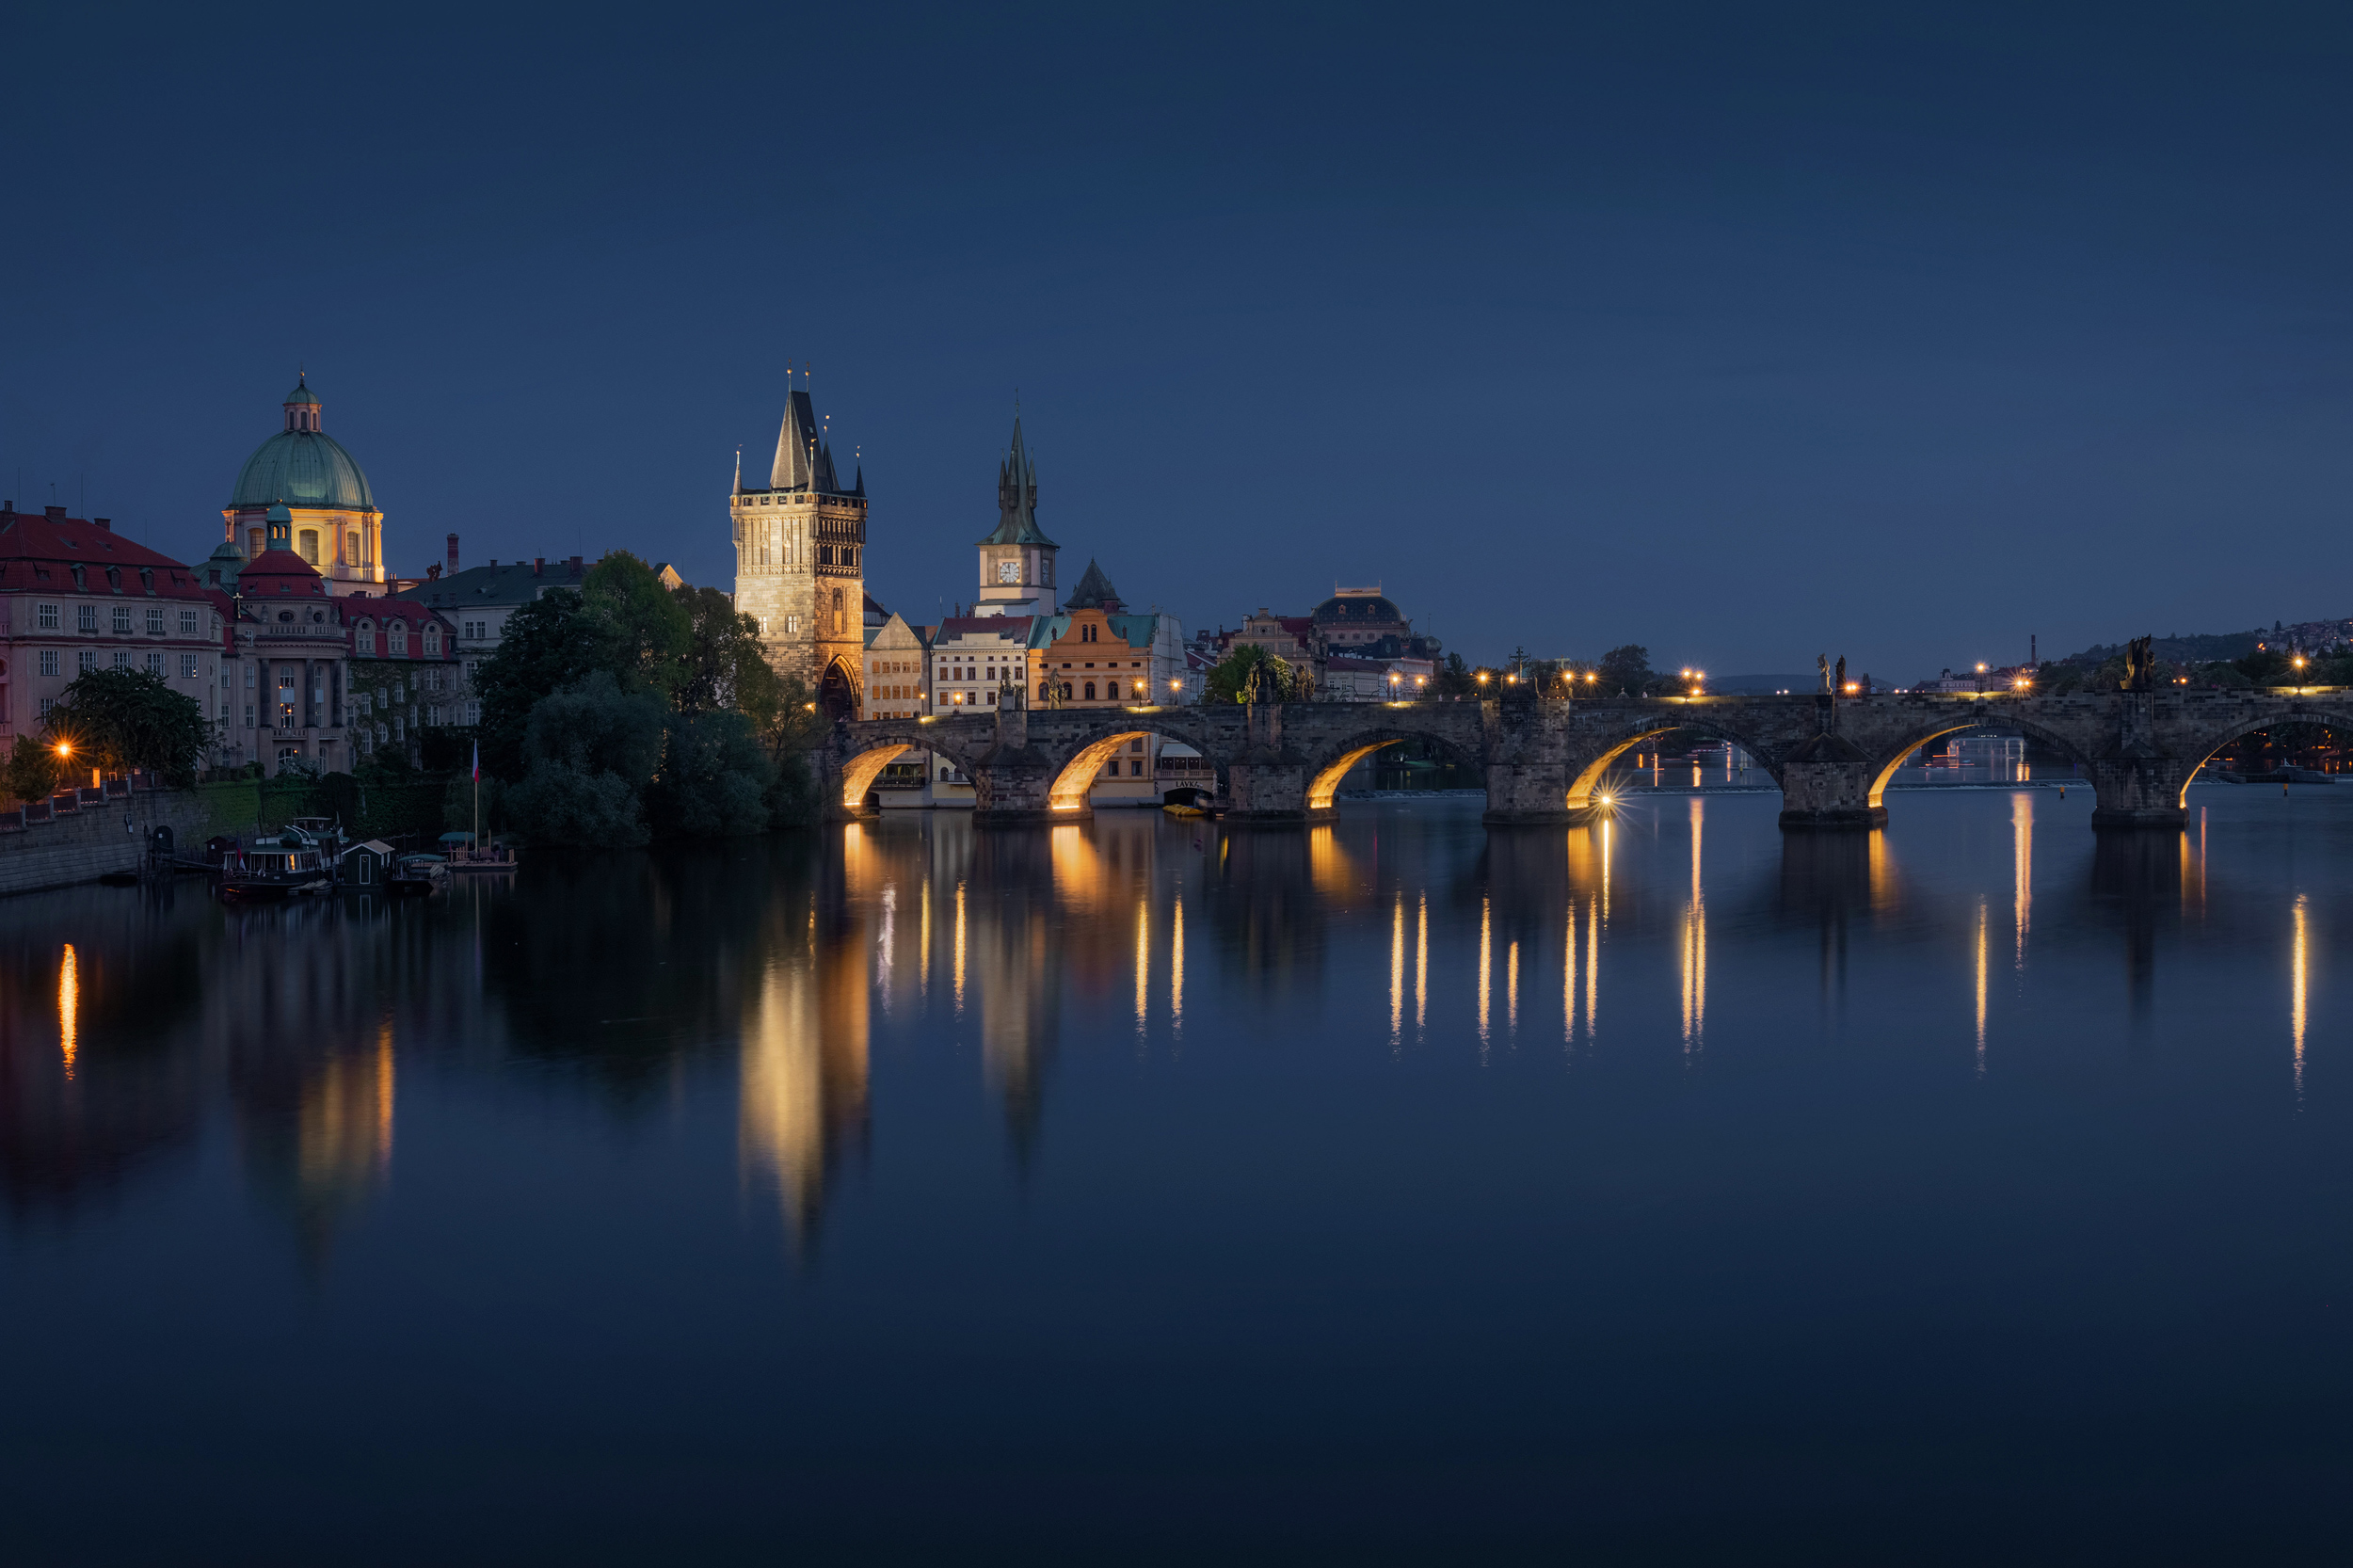 Prague skyline and bridge over river at night. Czech Republic.